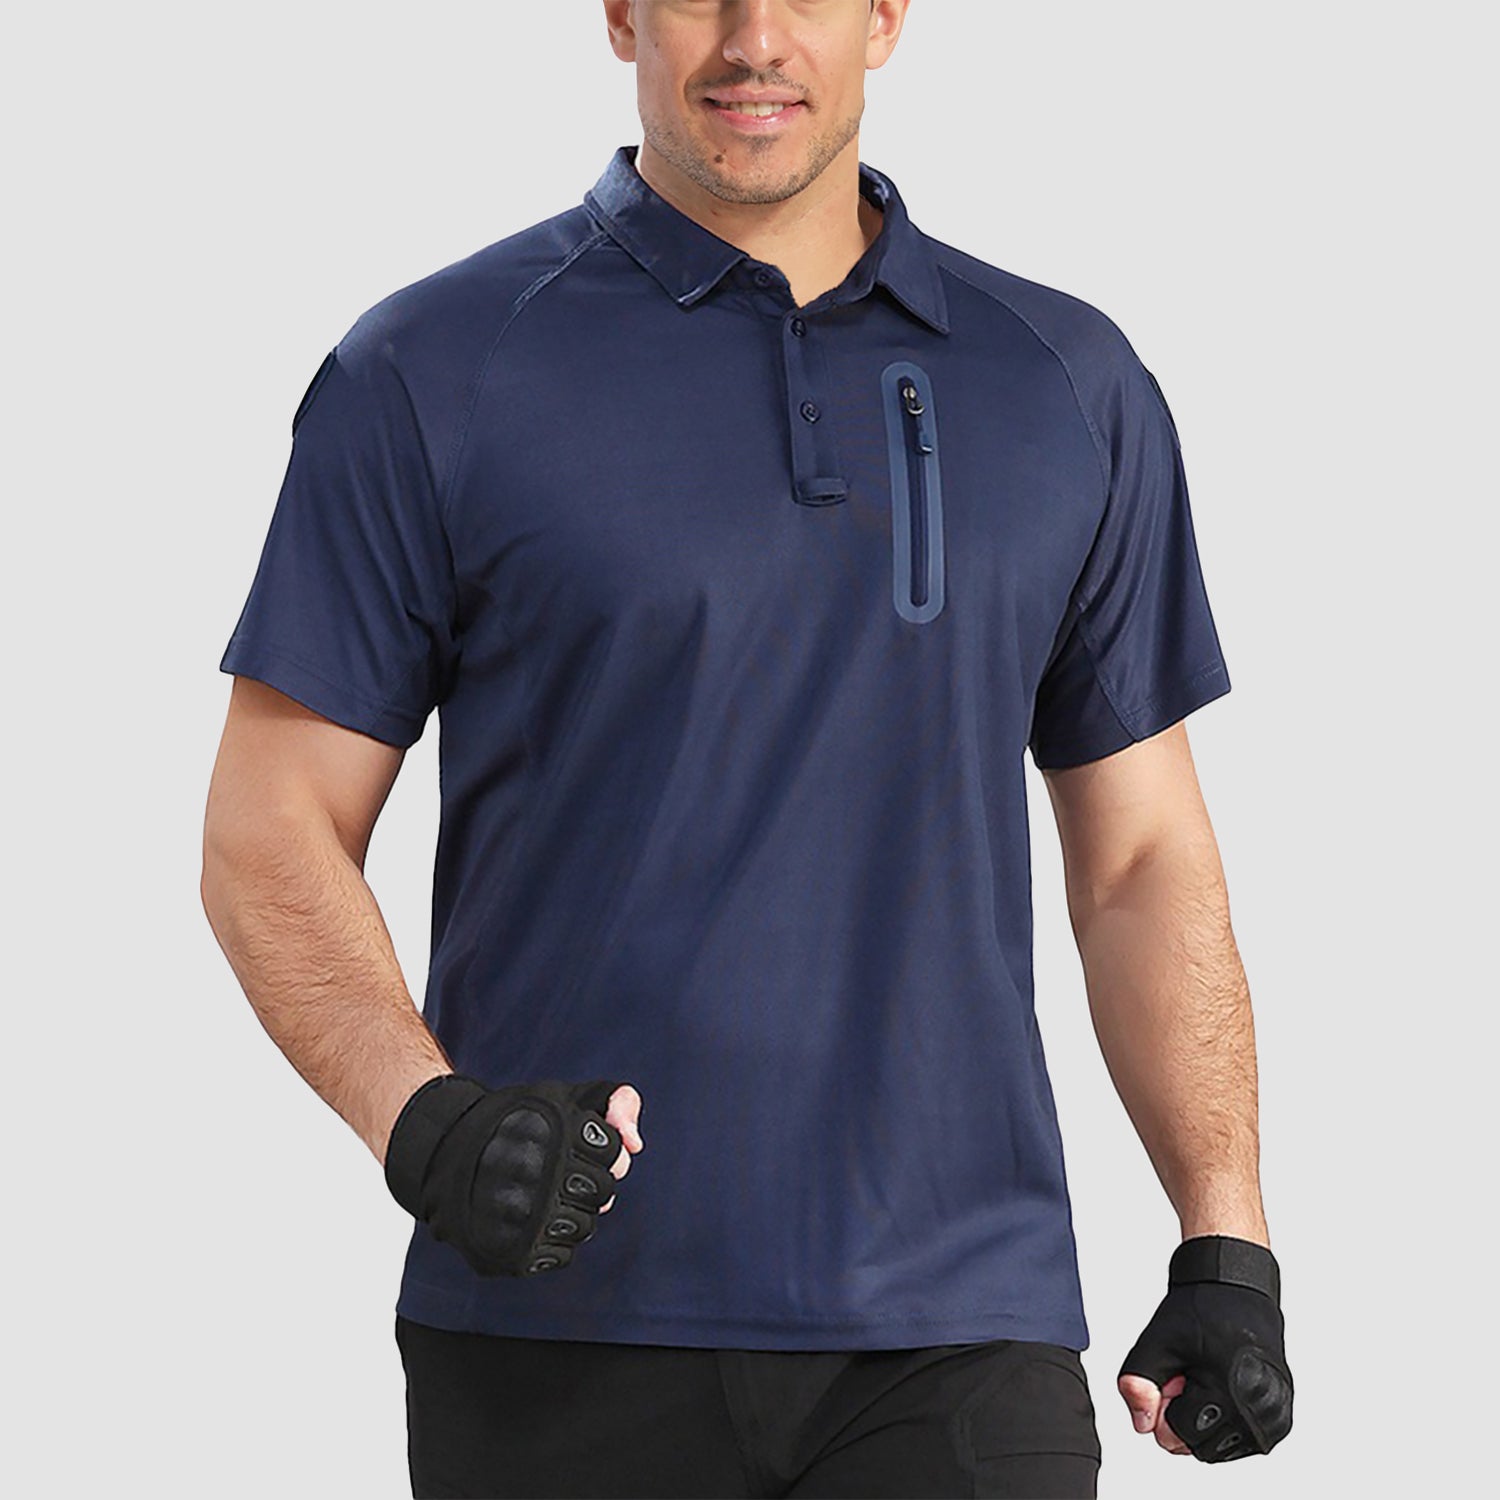 Men's Golf Polo Shirts 3 Button Pique Jersey Tactical with a Chest Zipper Pocket